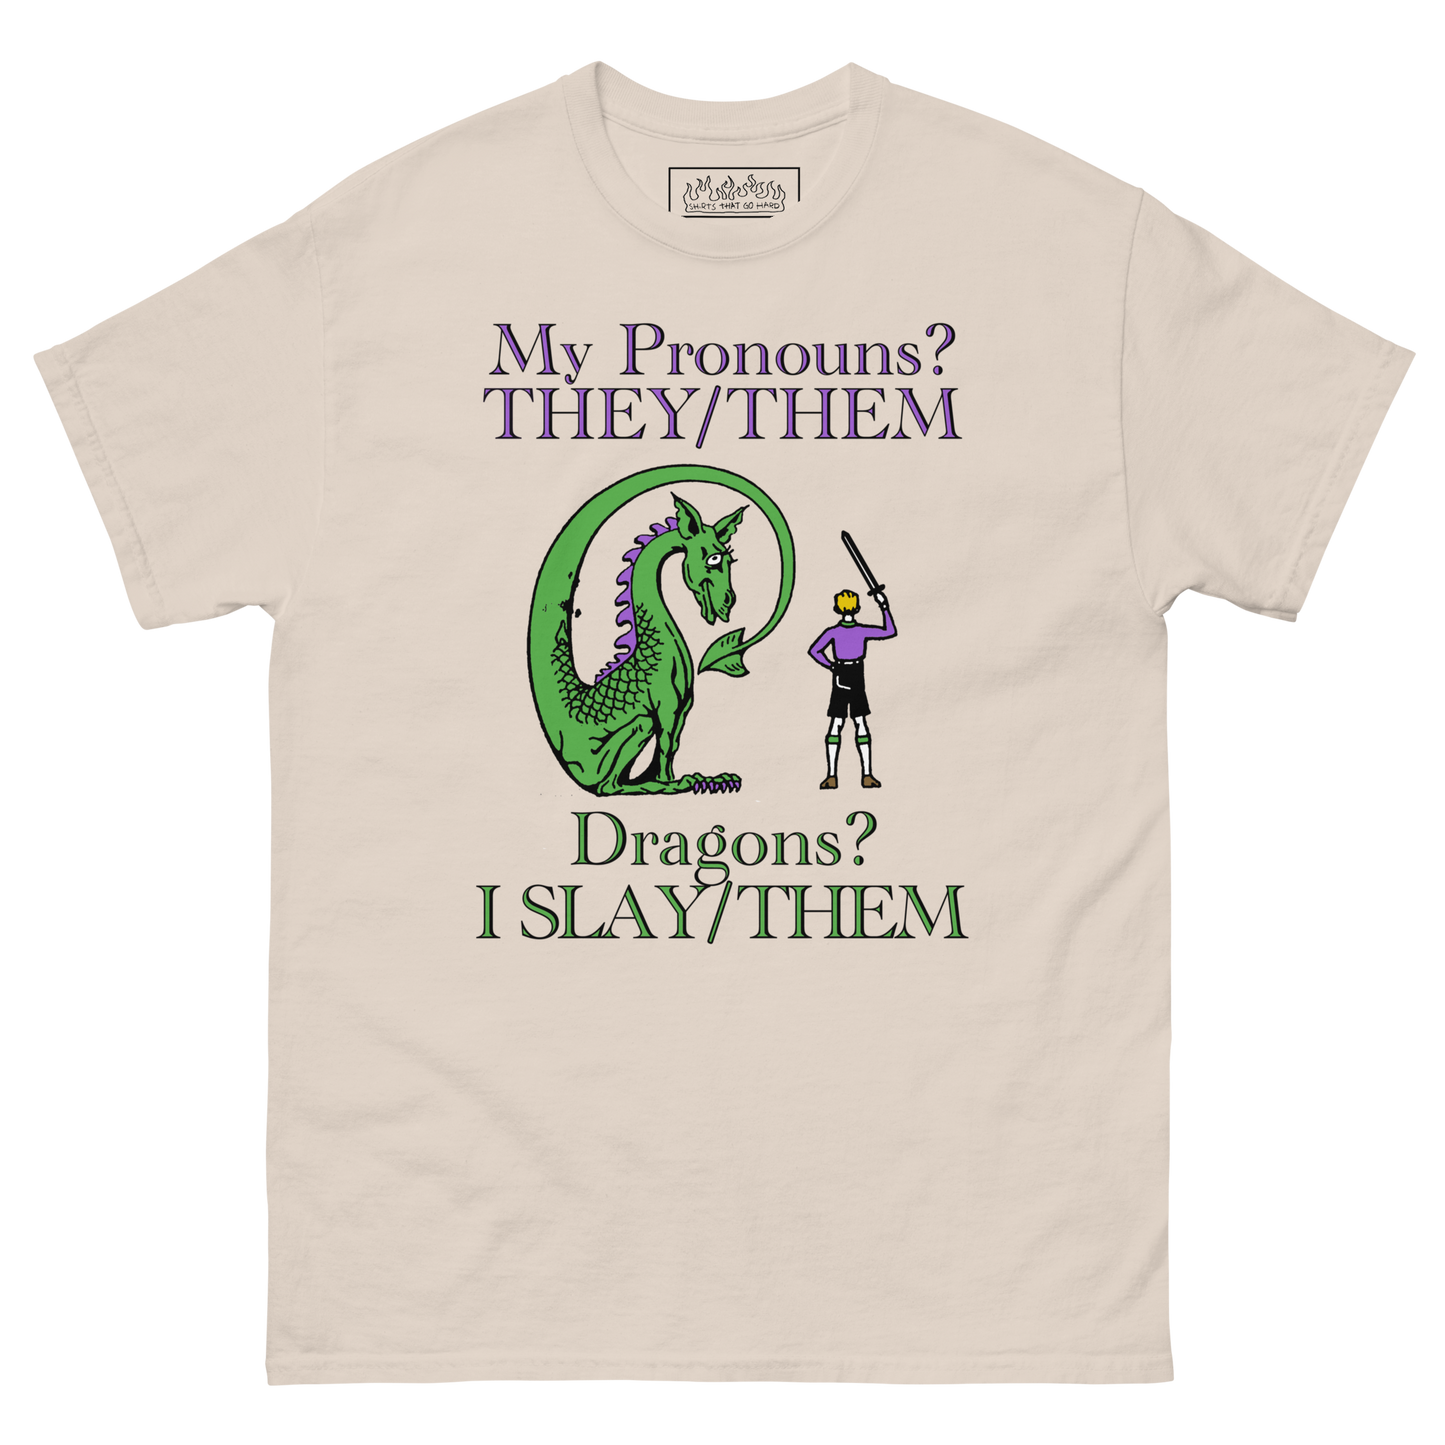 My Pronouns? They/Them. Dragons? I Slay/Them.